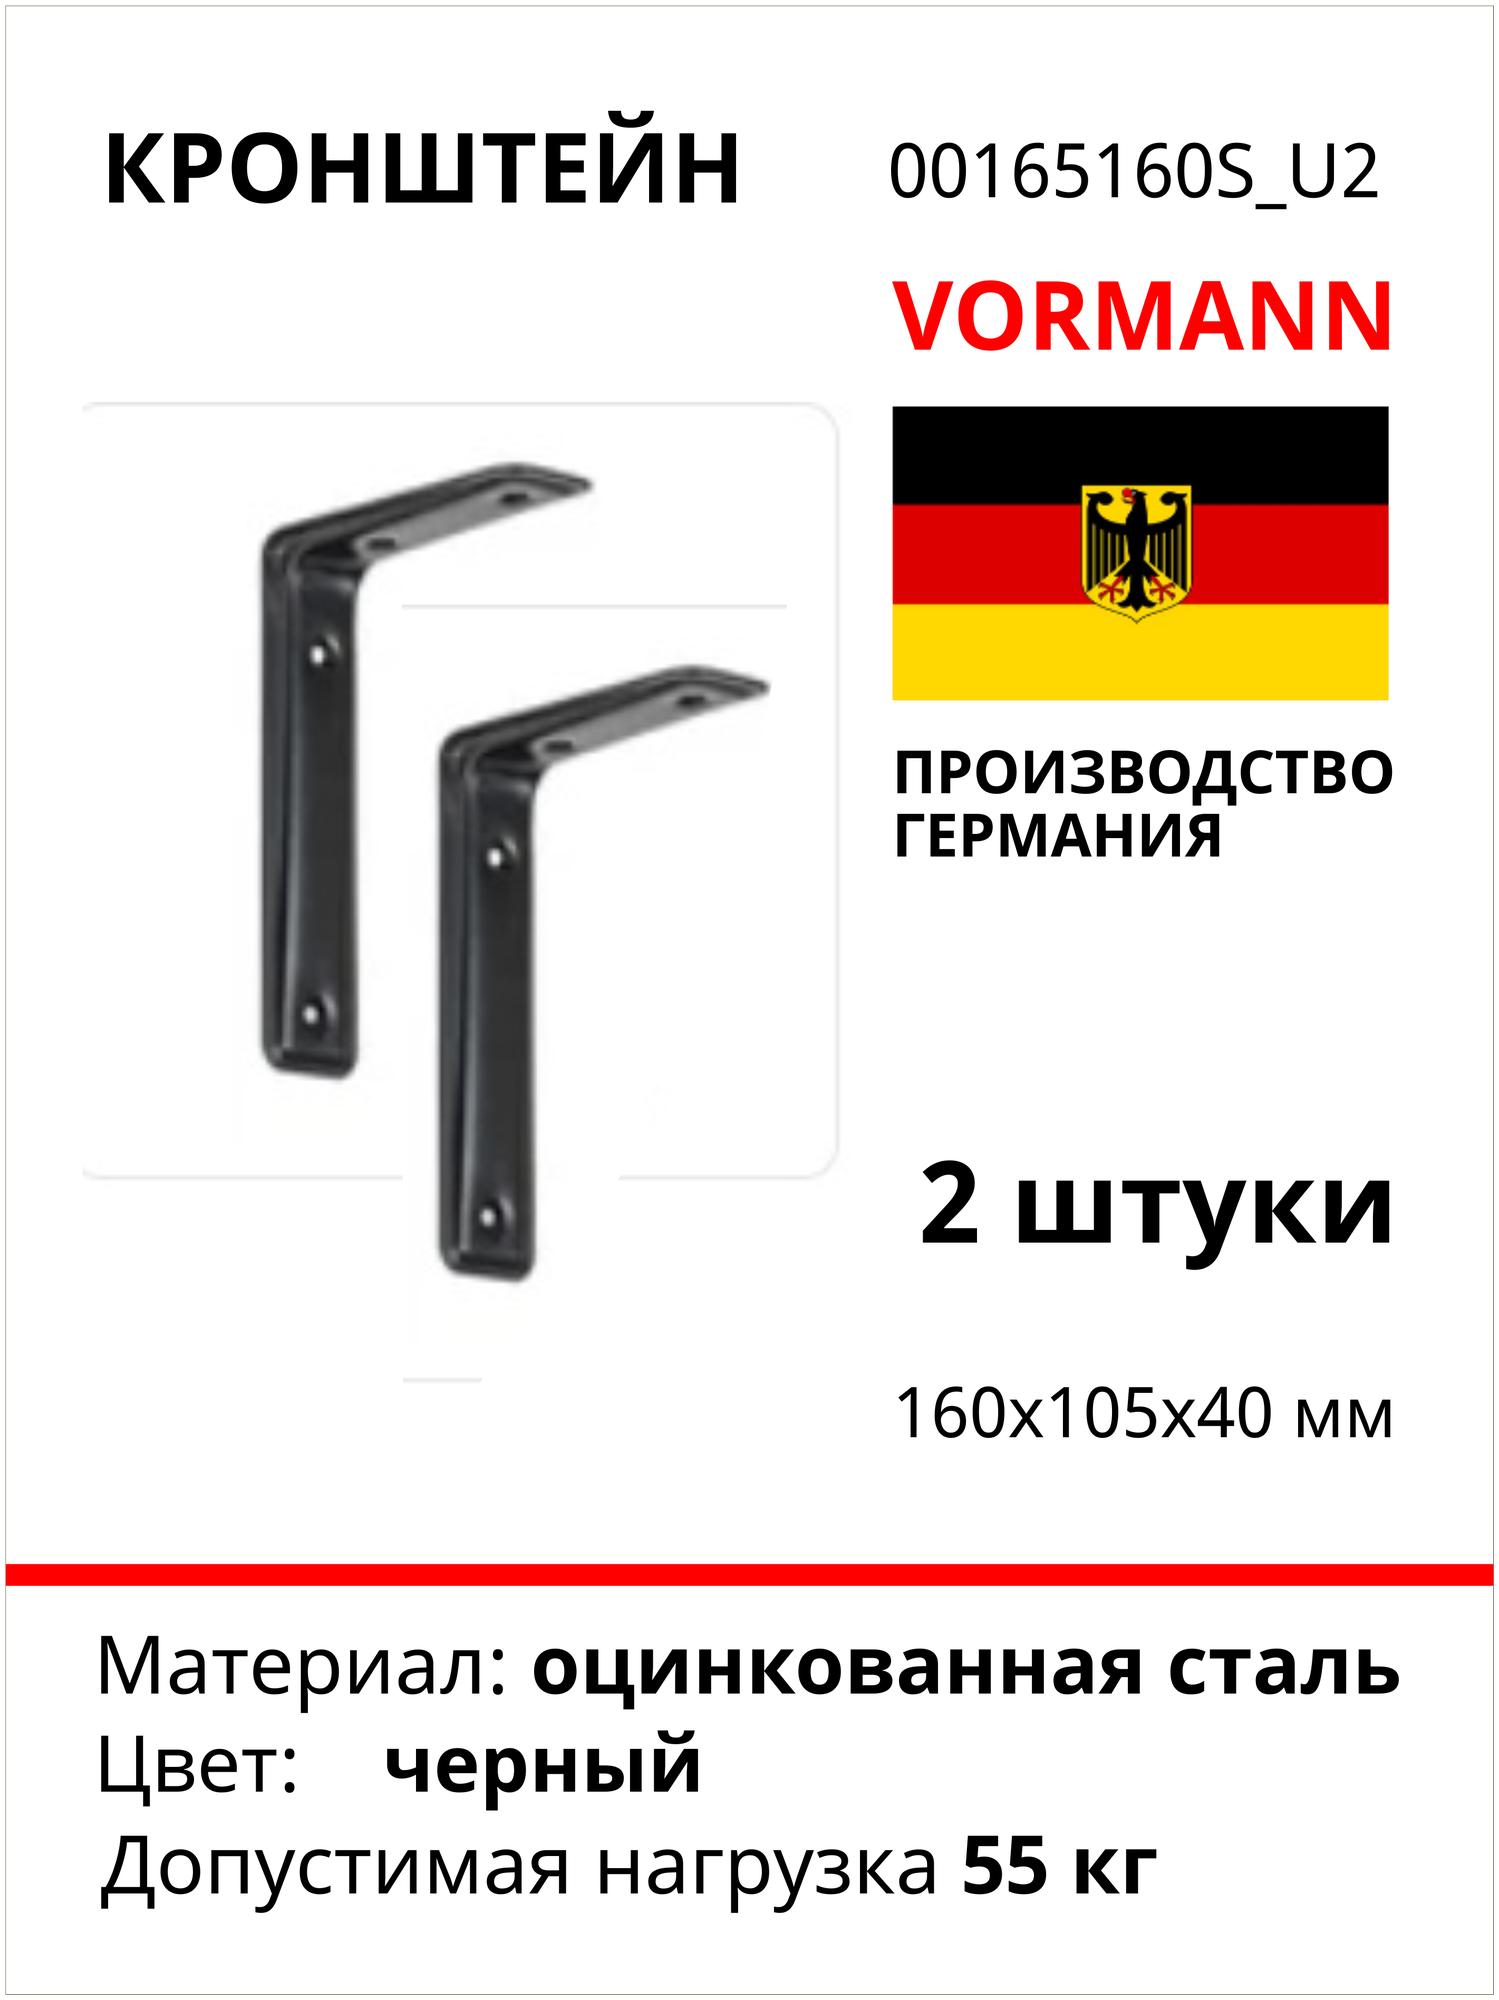 Кронштейн VORMANN 3-F 160х105х40 мм, оцинкованный, цвет: черный, 50 кг 00165 160 S_U2, комплект 2шт